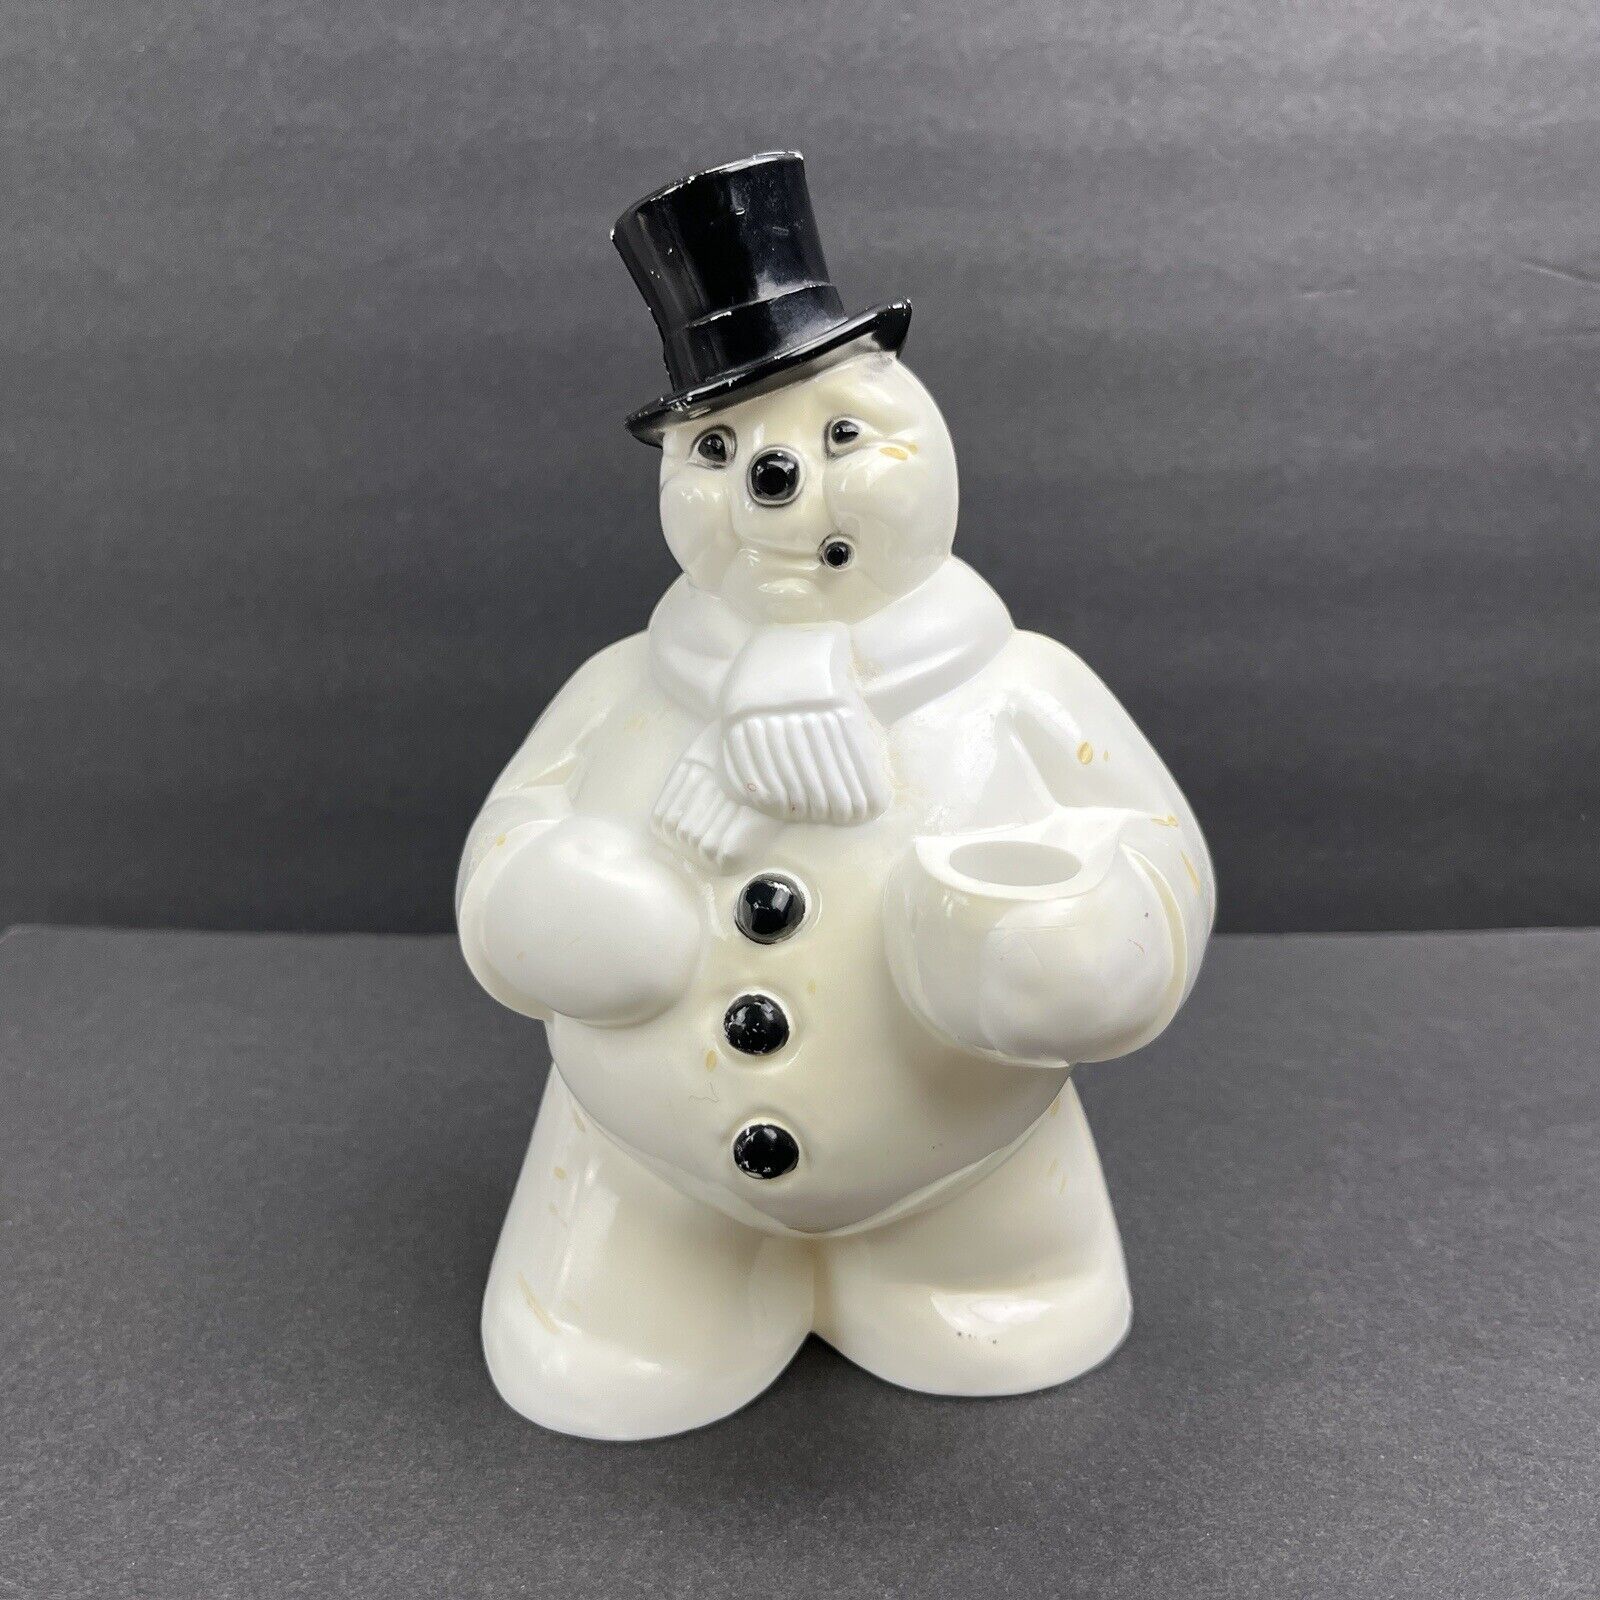 VTG Royalite Royal Electric Snowman Christmas Decor Plastic No Cord/Bulb 50s 60s